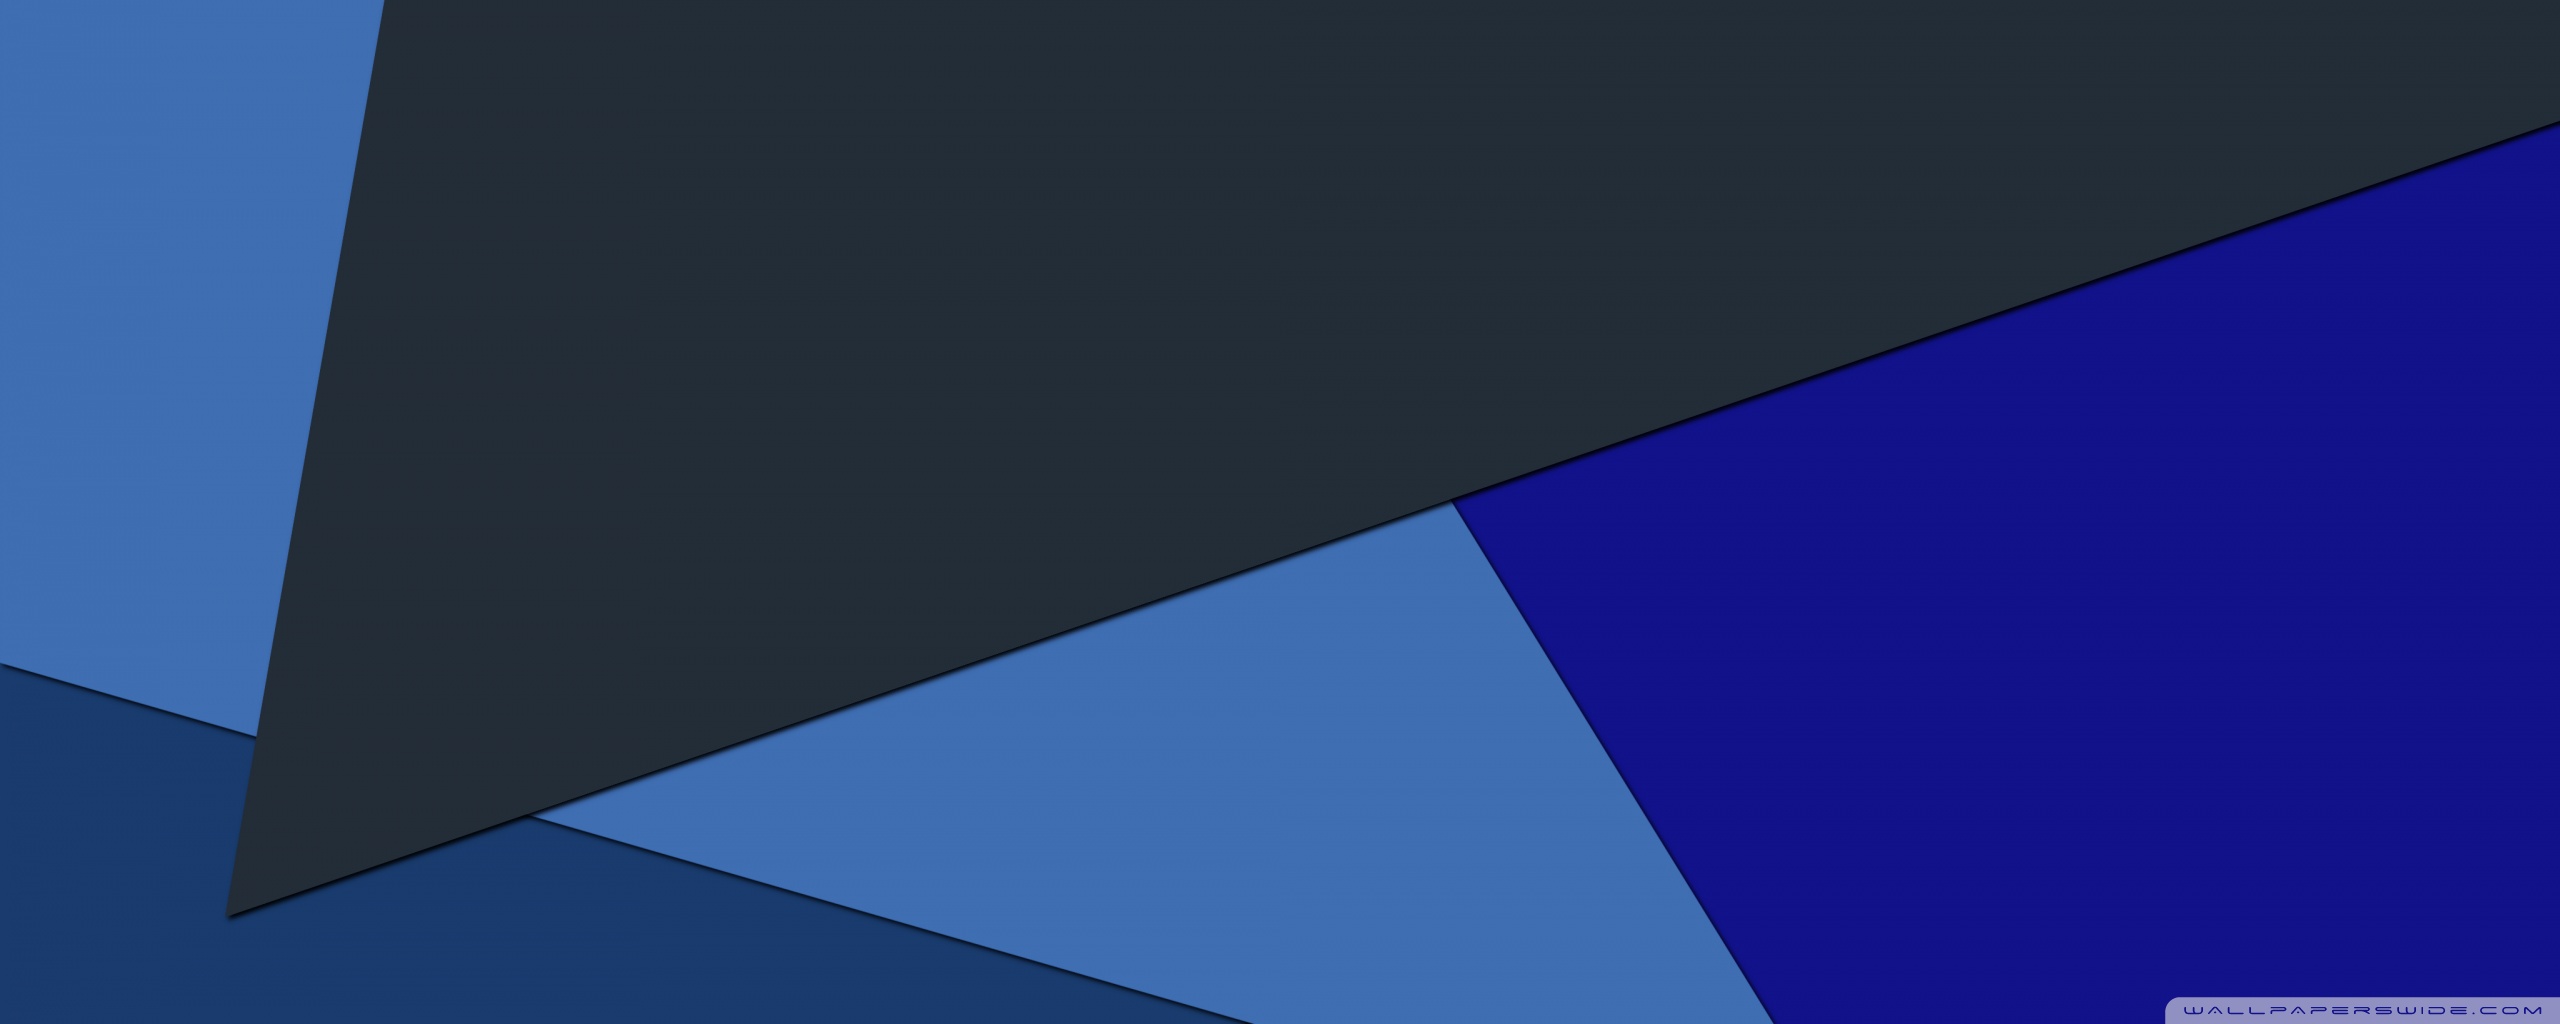 Blue and Grey Ultra HD Desktop Background Wallpaper for : Widescreen ...